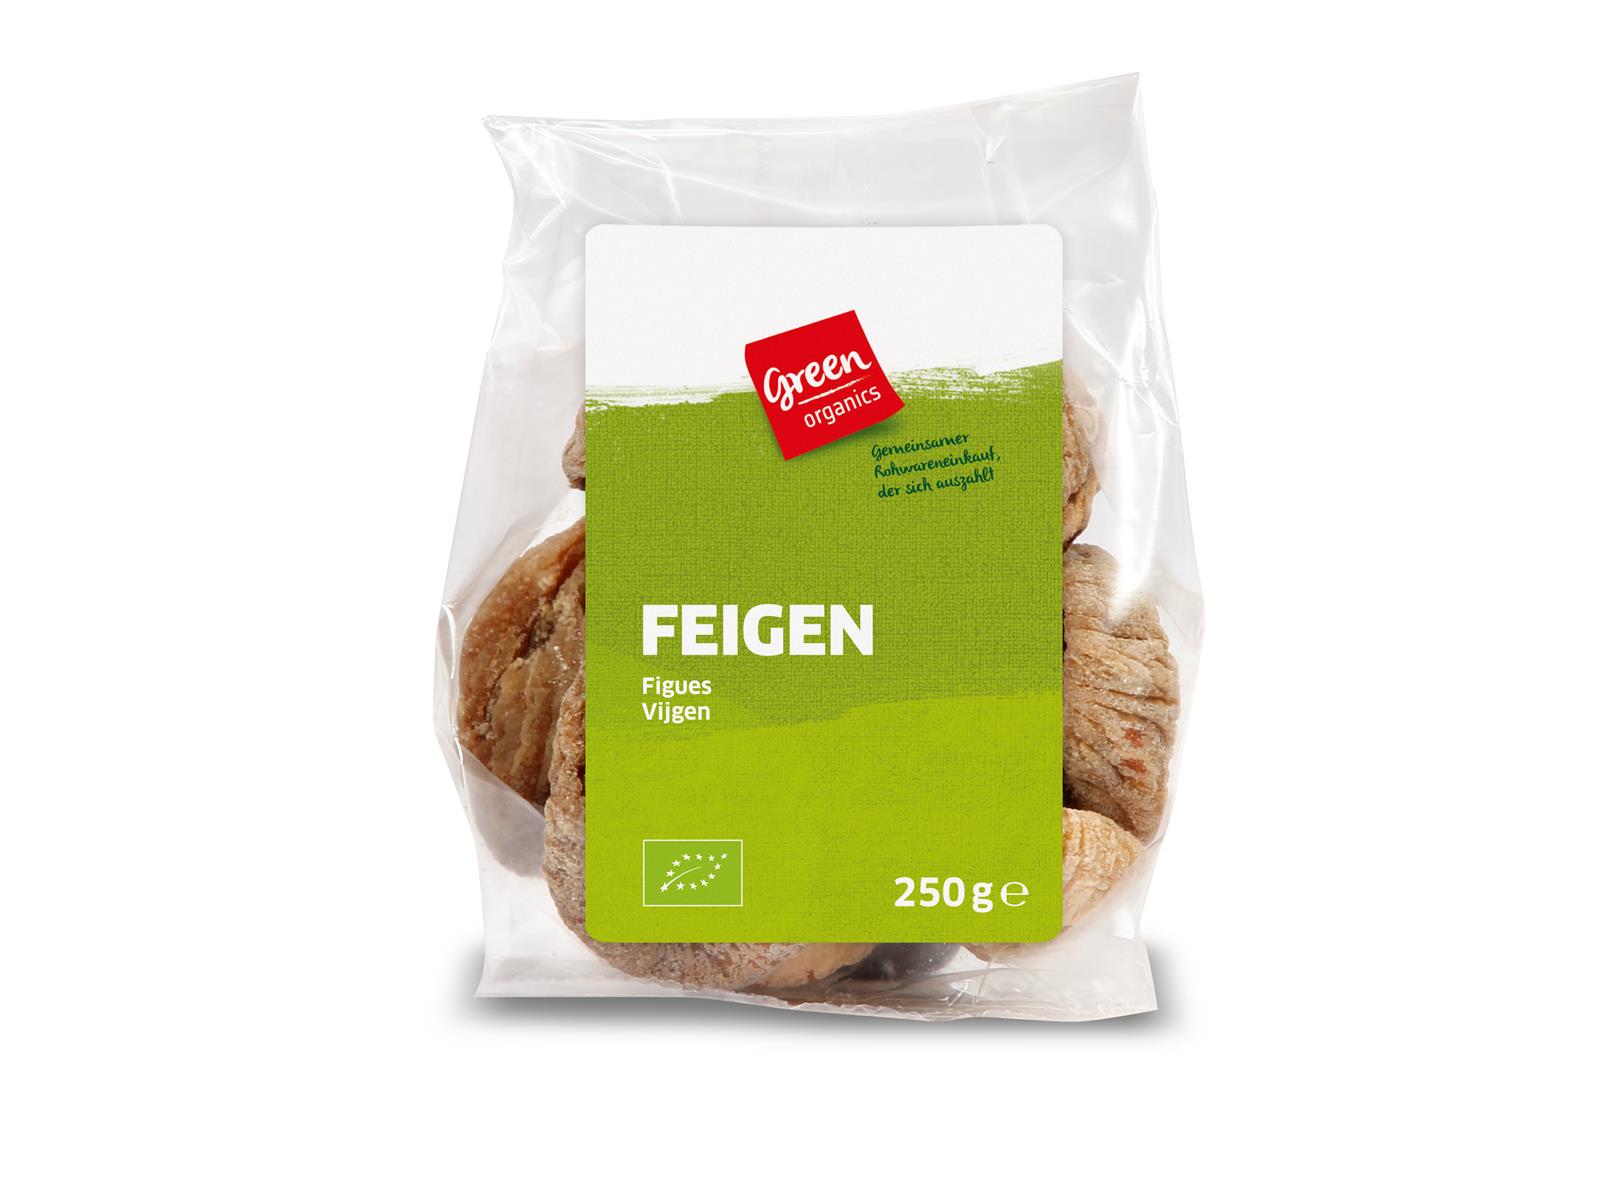 greenorganics Feigen 250 g